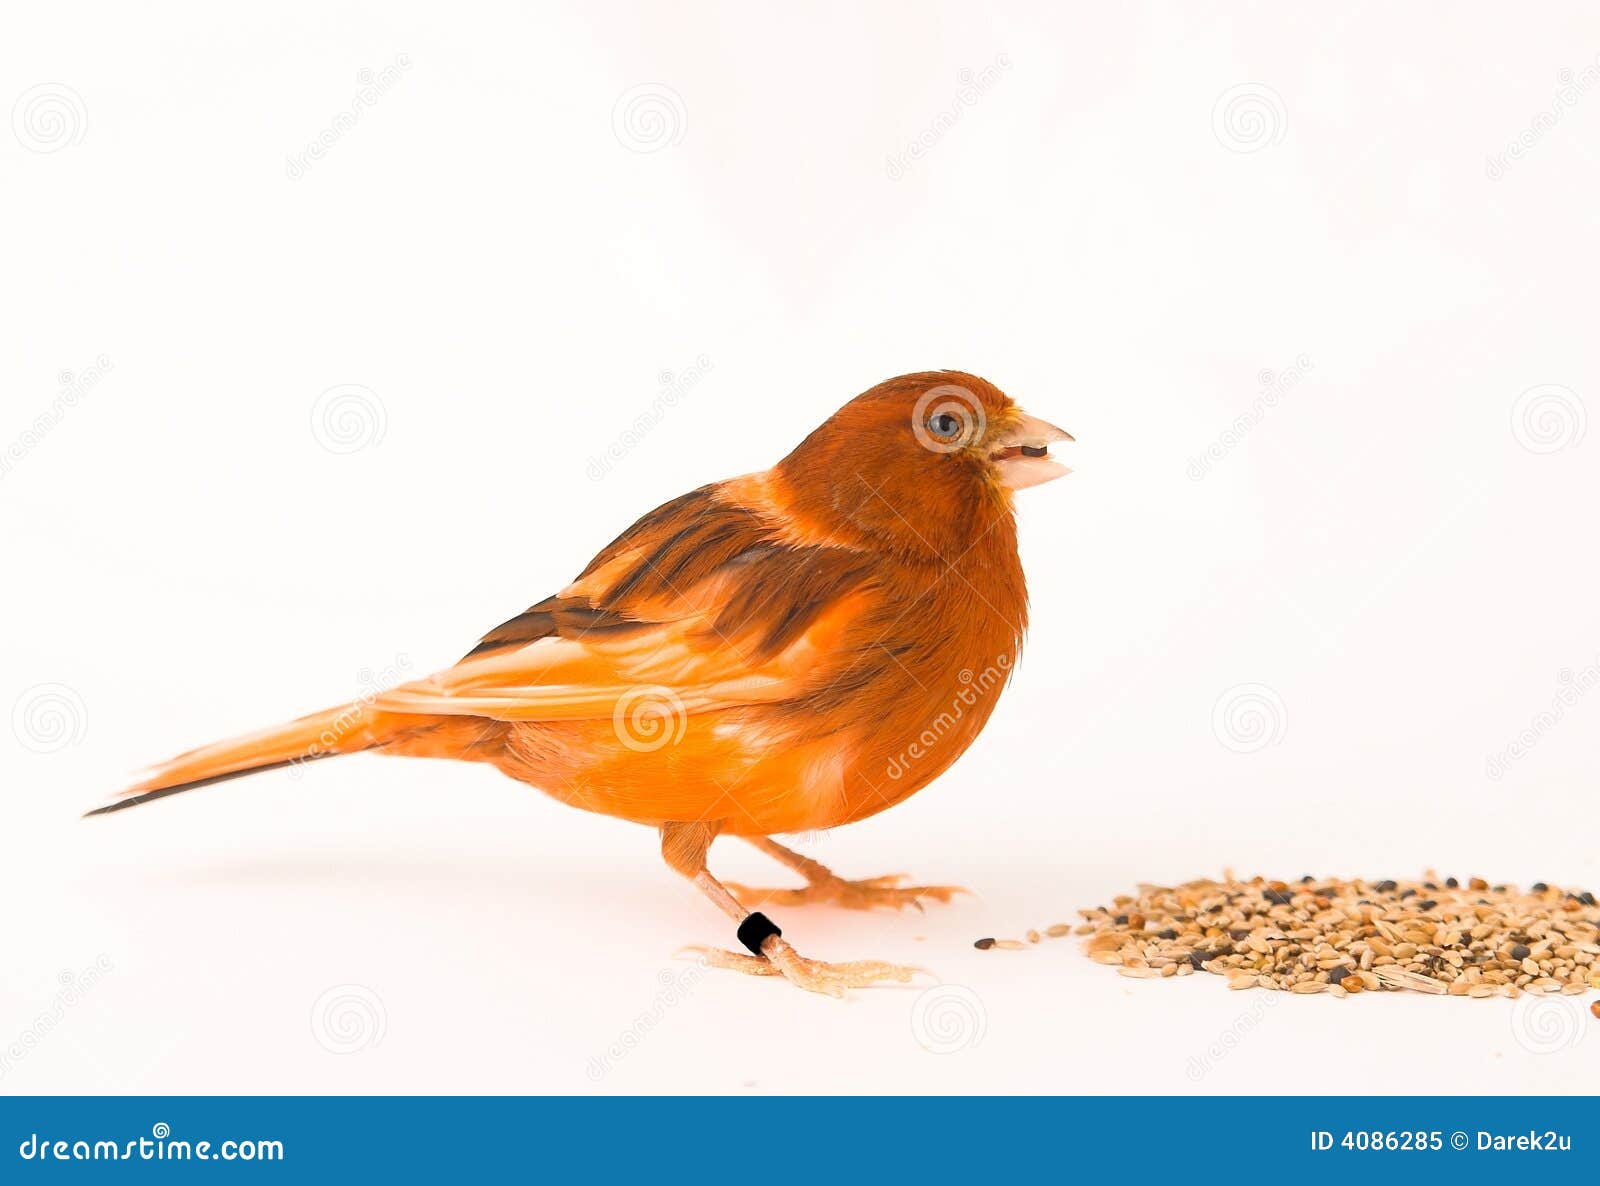 canary bird - female